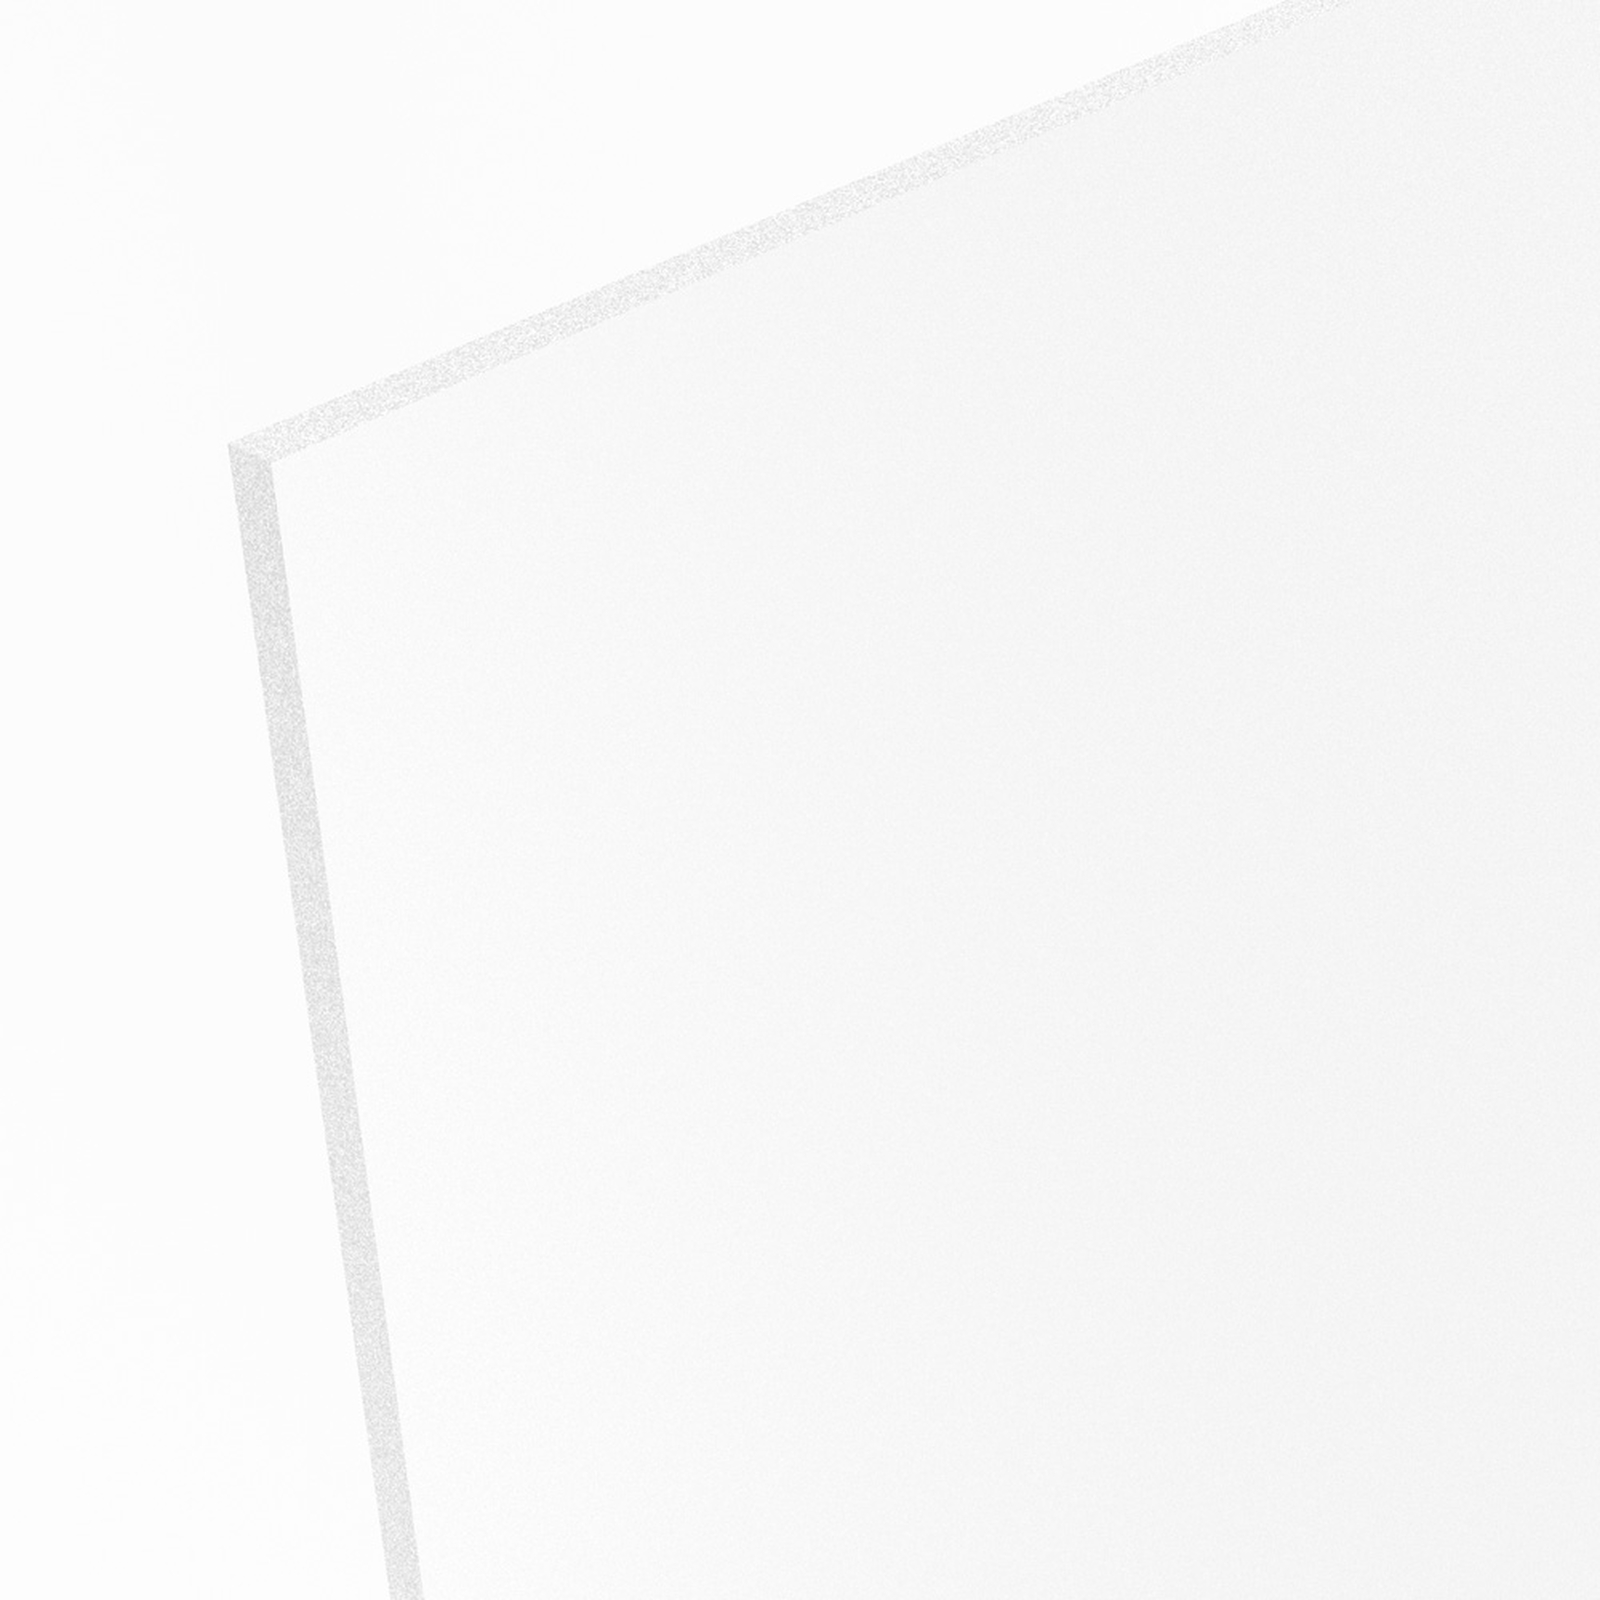 Kunststoff Platte PVC Hartschaumplatte 1mm Zuschnitt weiß 795 x 529 mm 